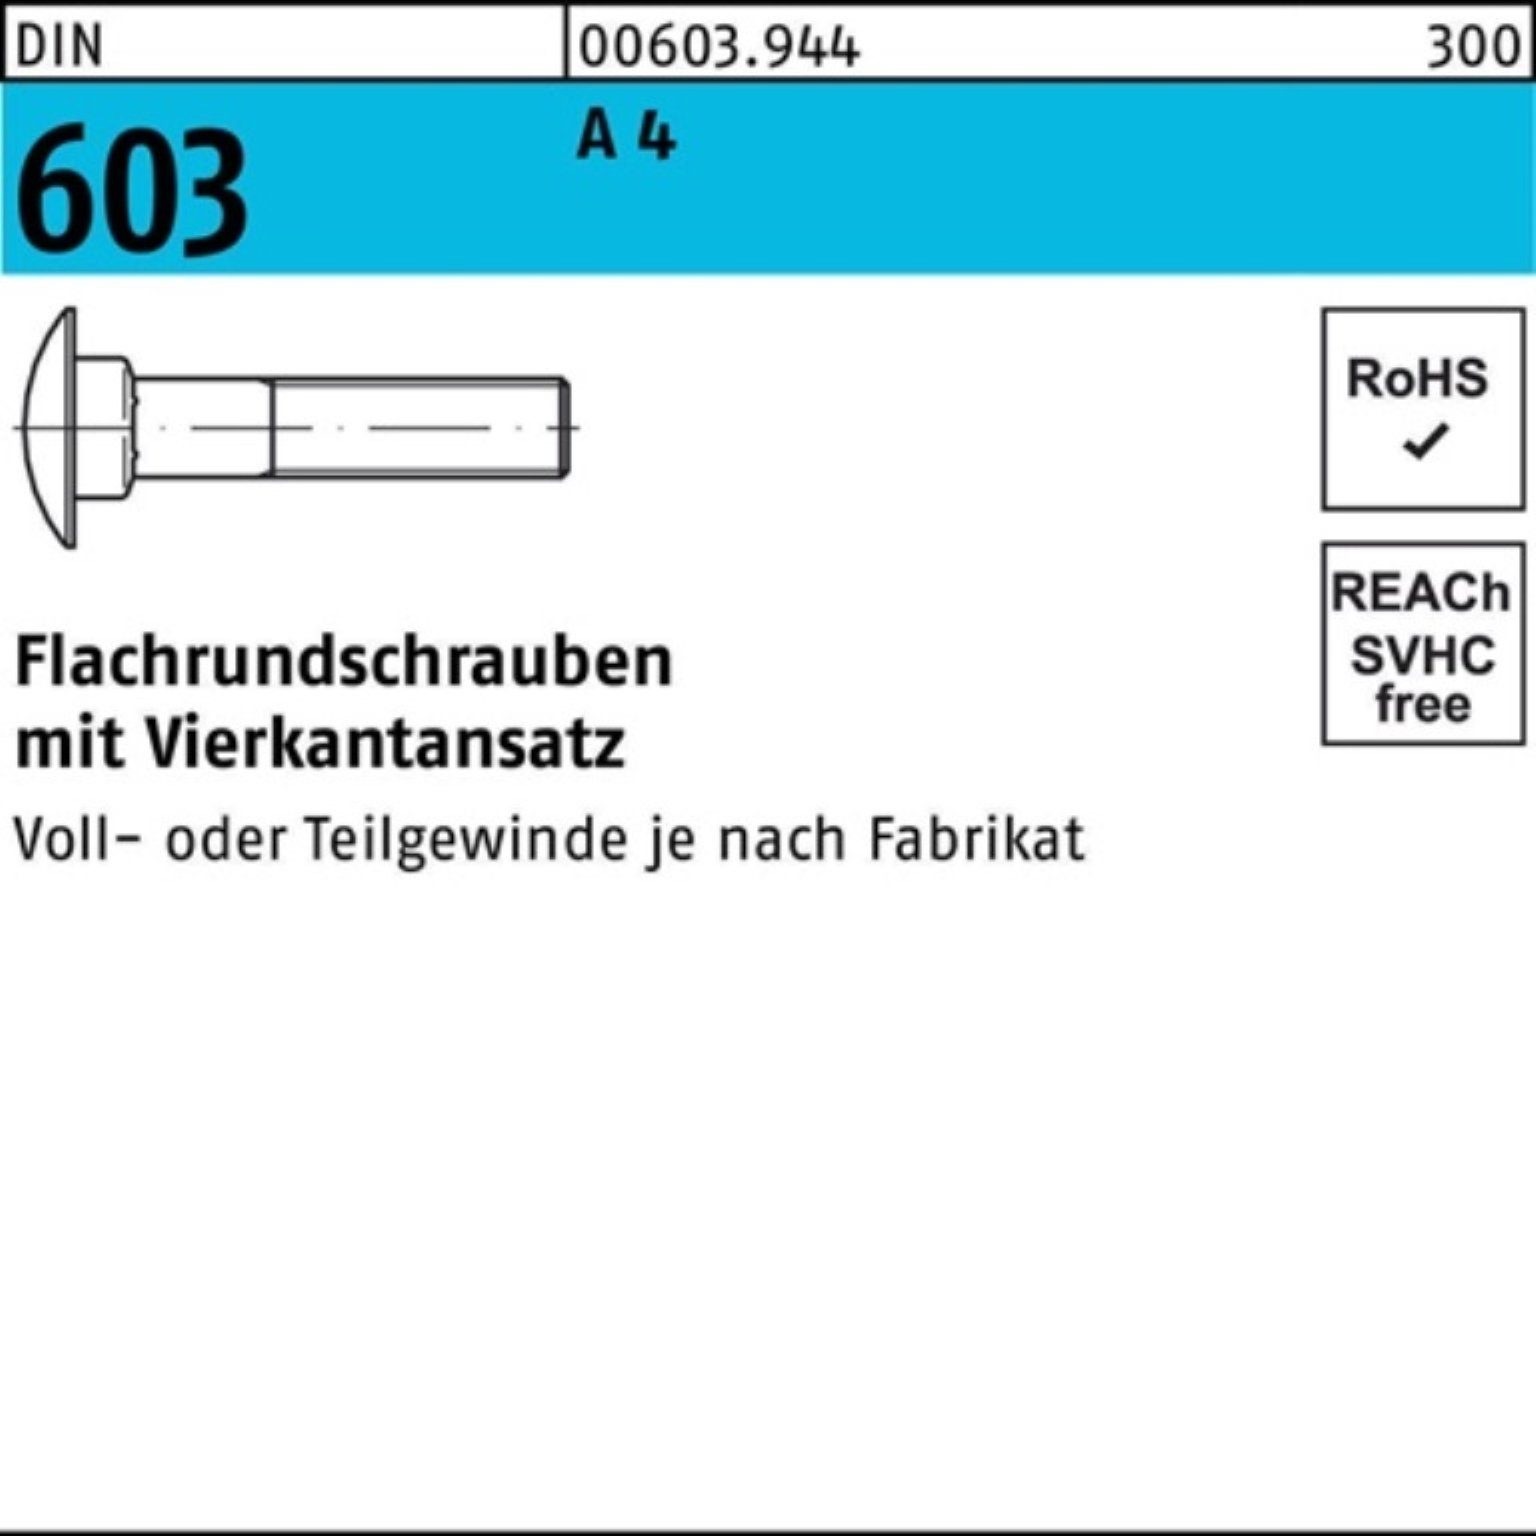 Reyher Schraube 100er Pack Flachrundschraube DIN 603 Vierkantansatz M10x 150 A 4 1 St